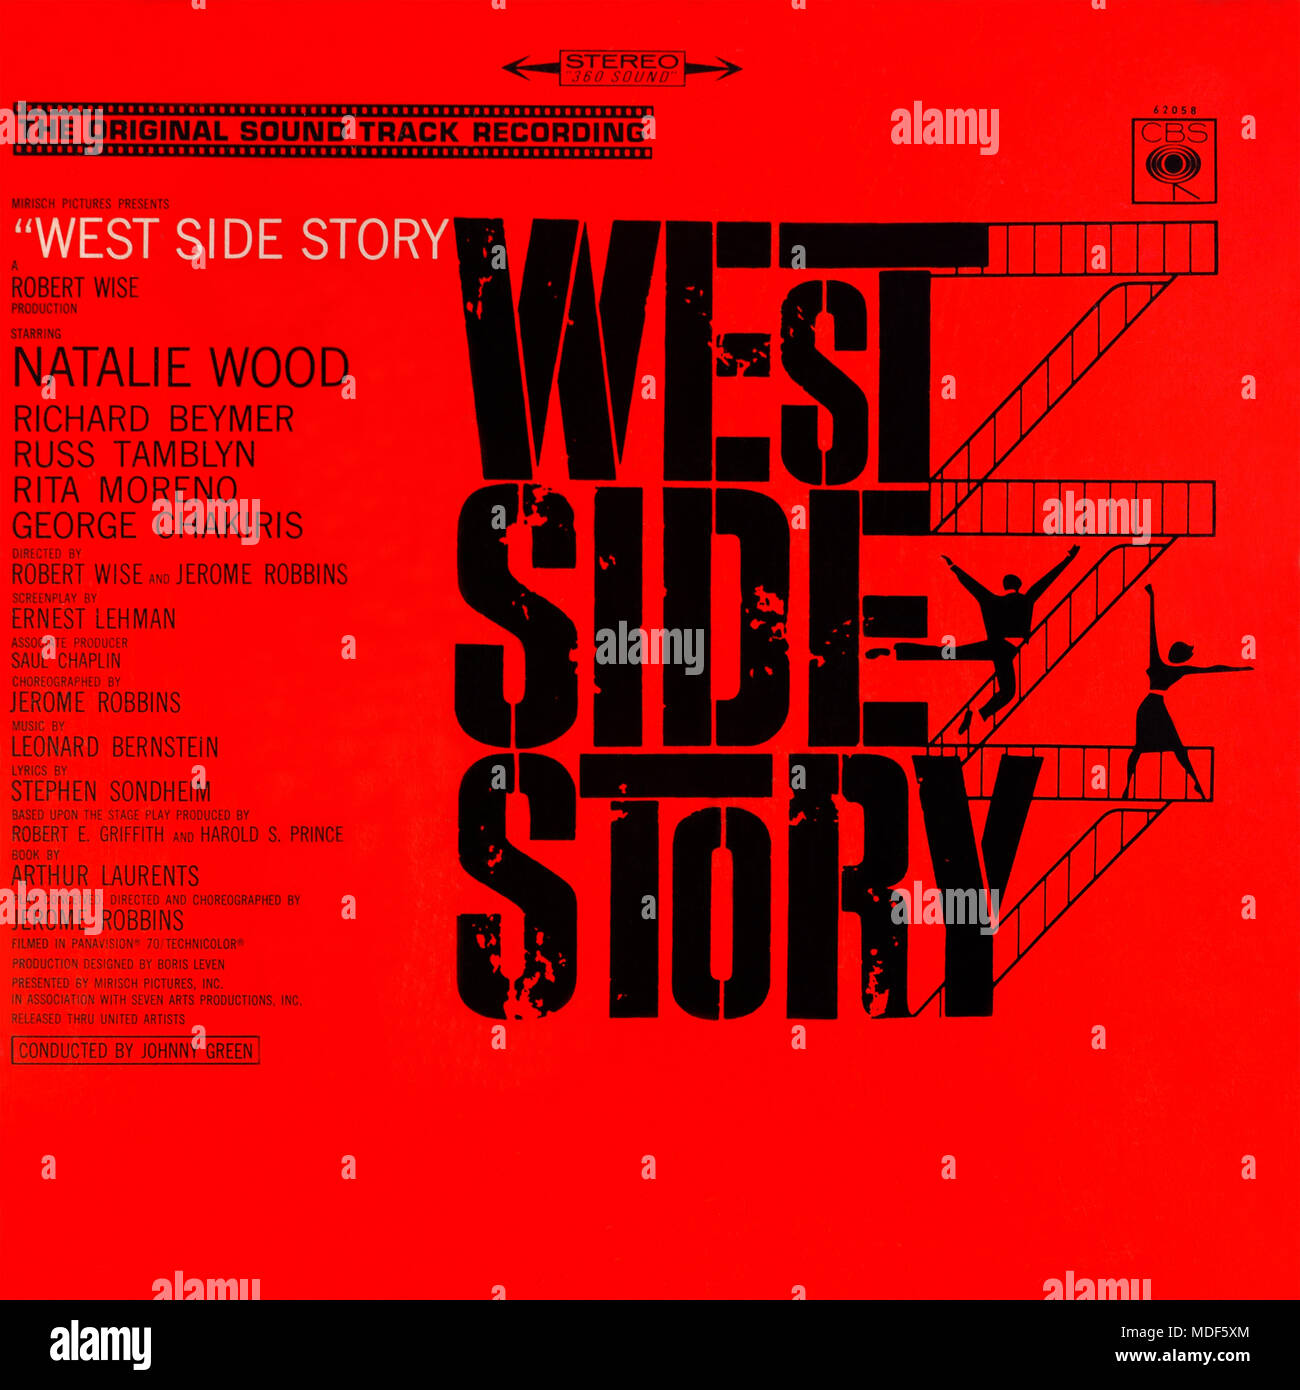 Altre immagini Leonard Bernstein - Original Vinyl Album Cover - West Side Story (Original Sound Track Recording) - 1961 Stockfoto